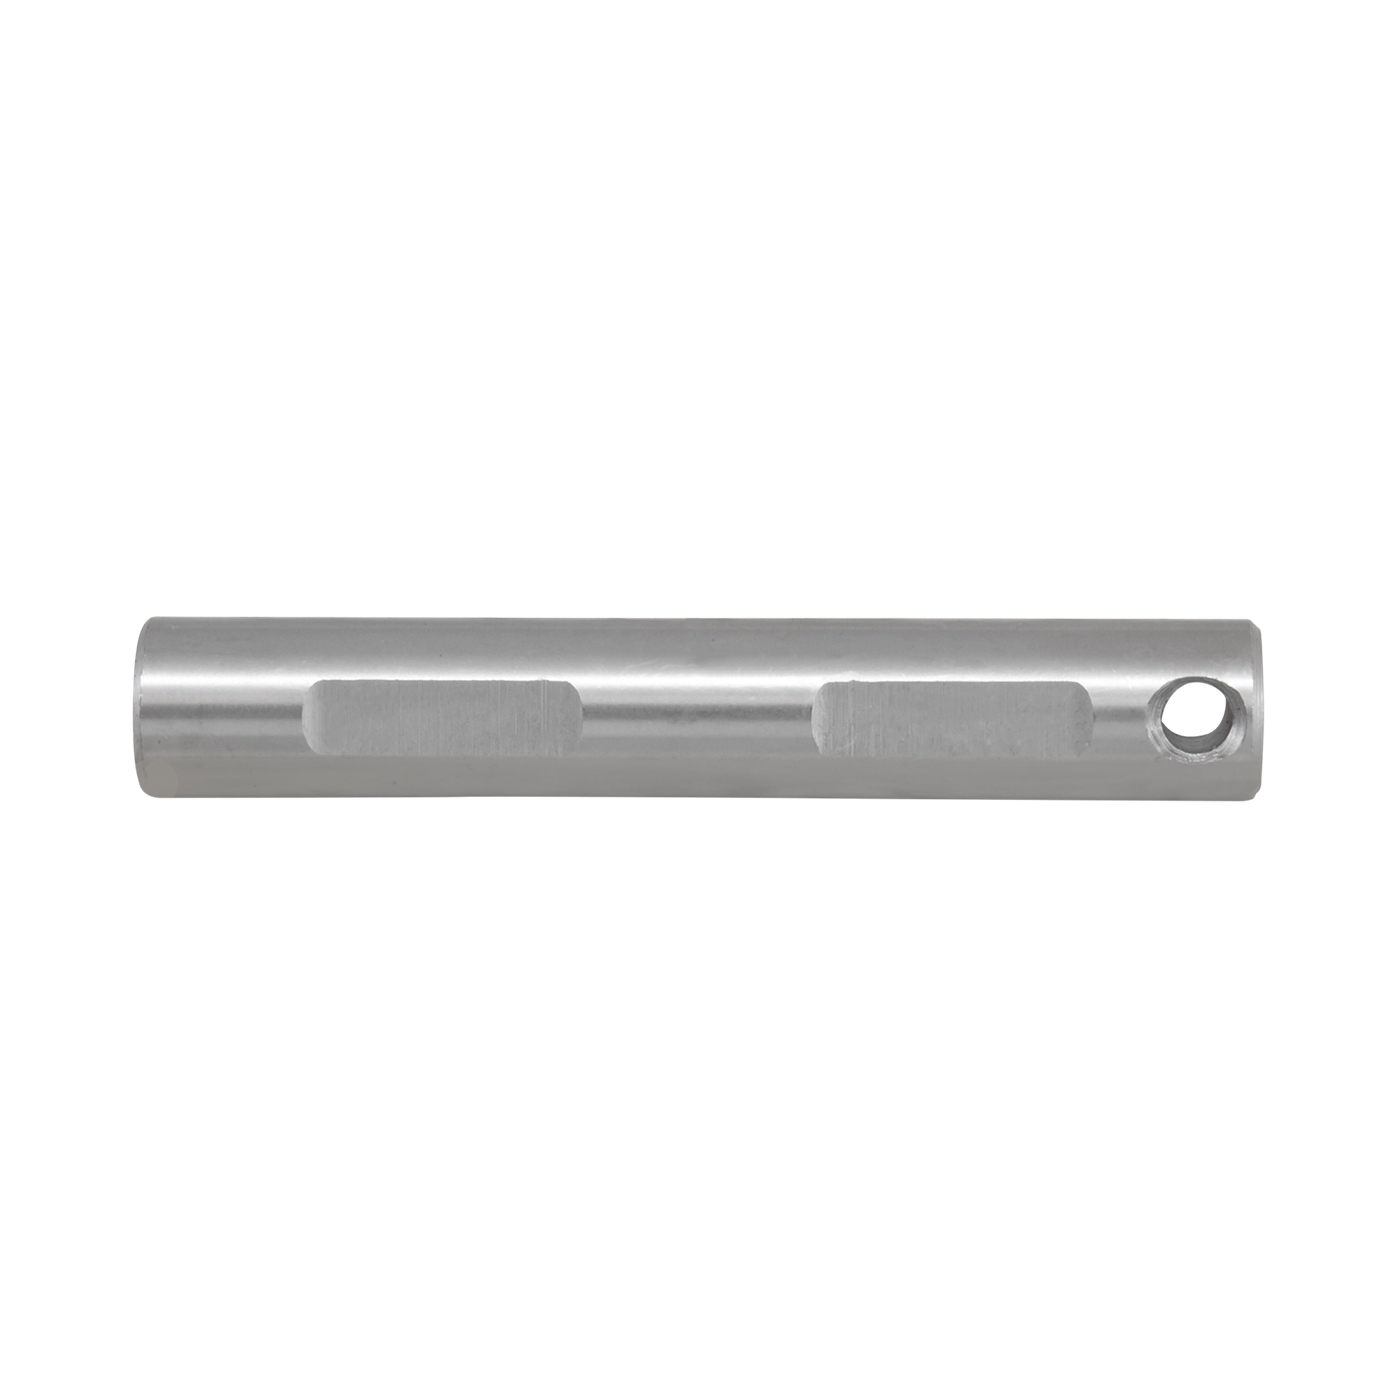 Model 35 standard Open cross pin, roll PIN design, 0.685" DIA (NOT TracLoc). 